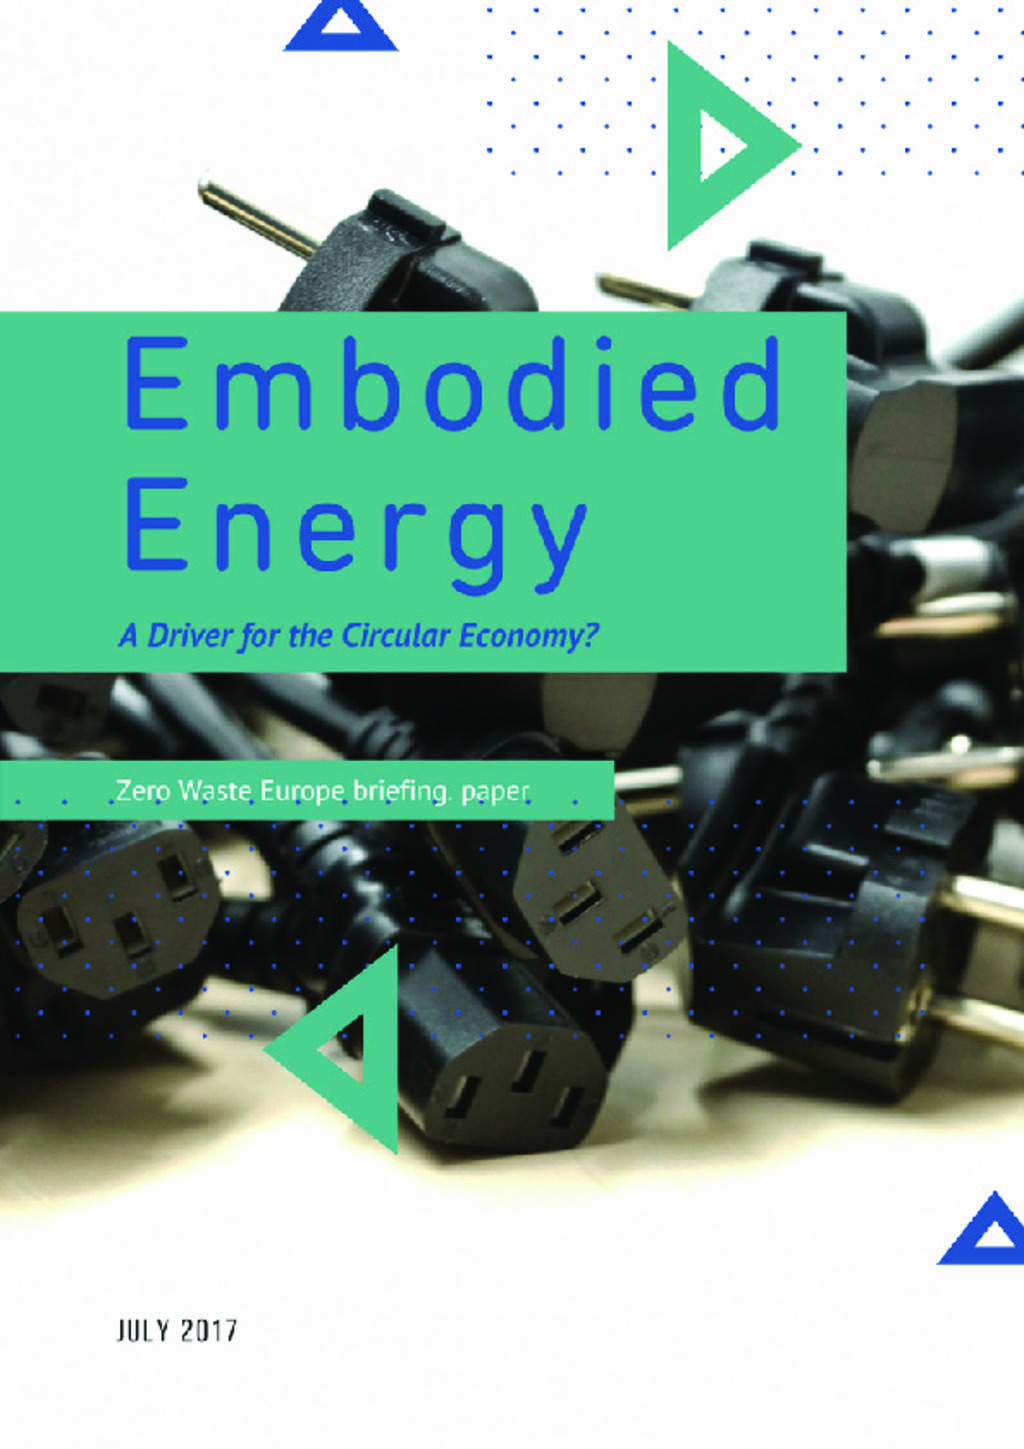 Embodied Energy in Zero Waste